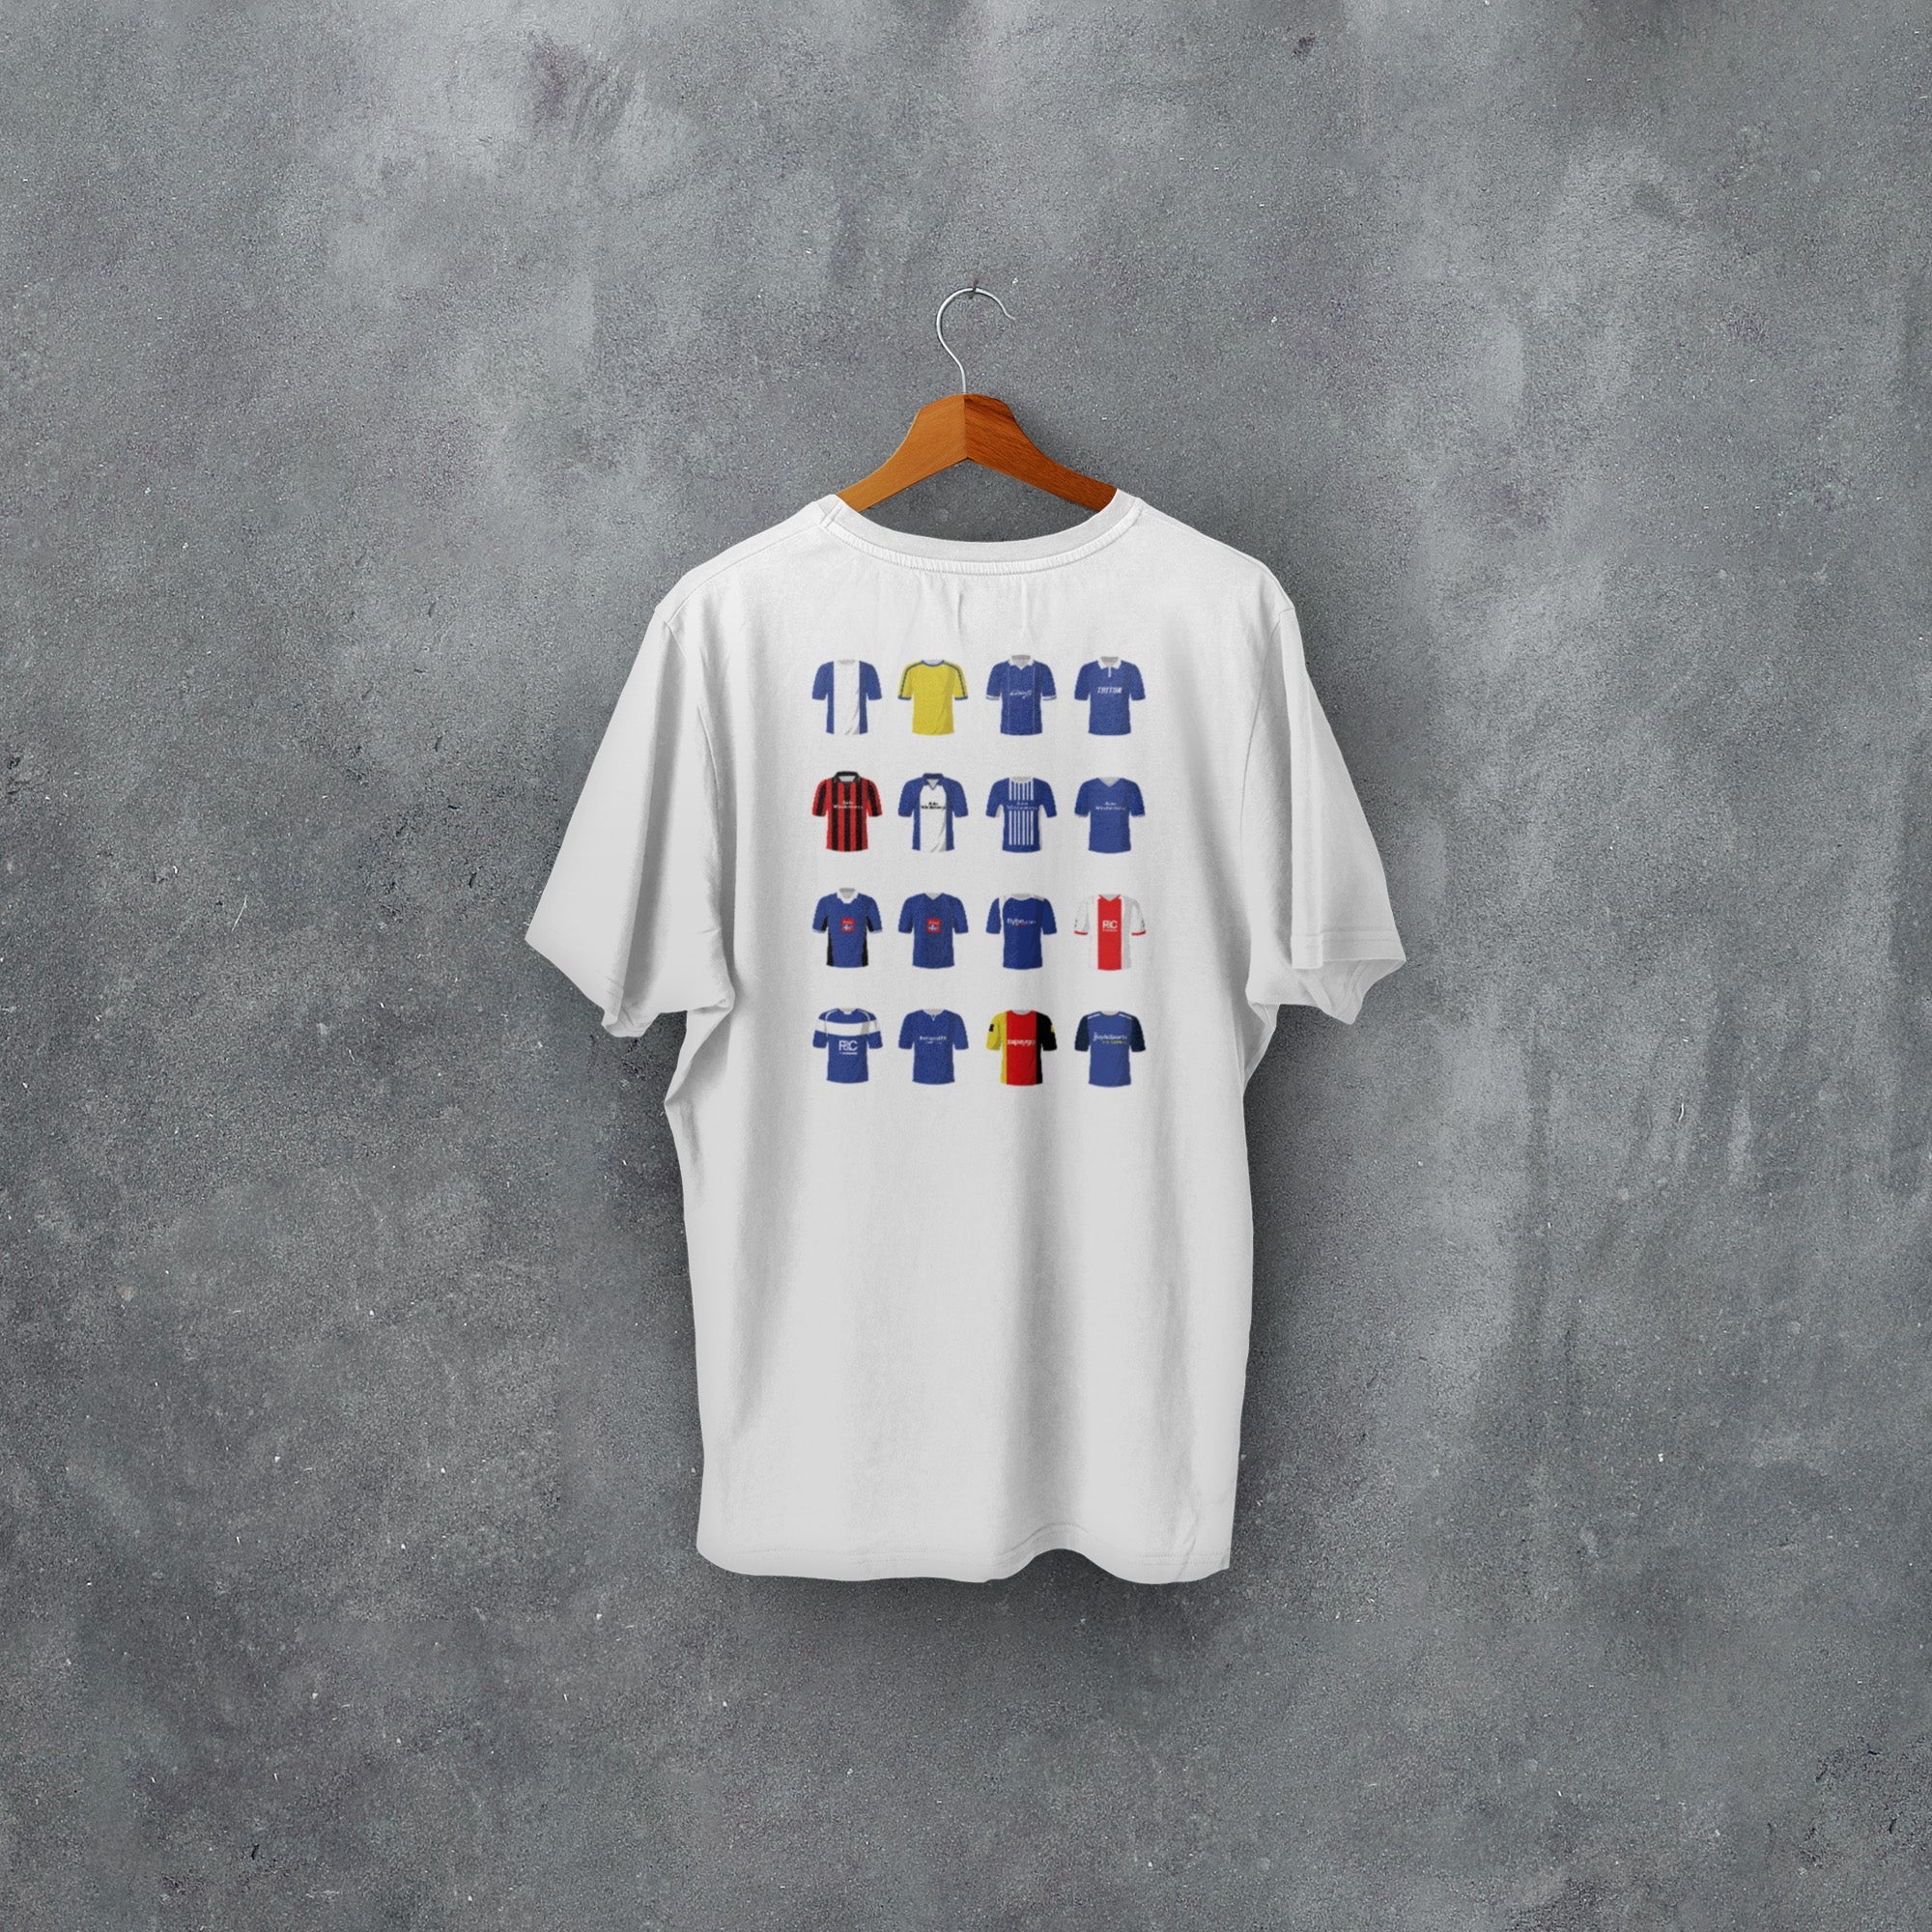 Birmingham Classic Kits Football T-Shirt